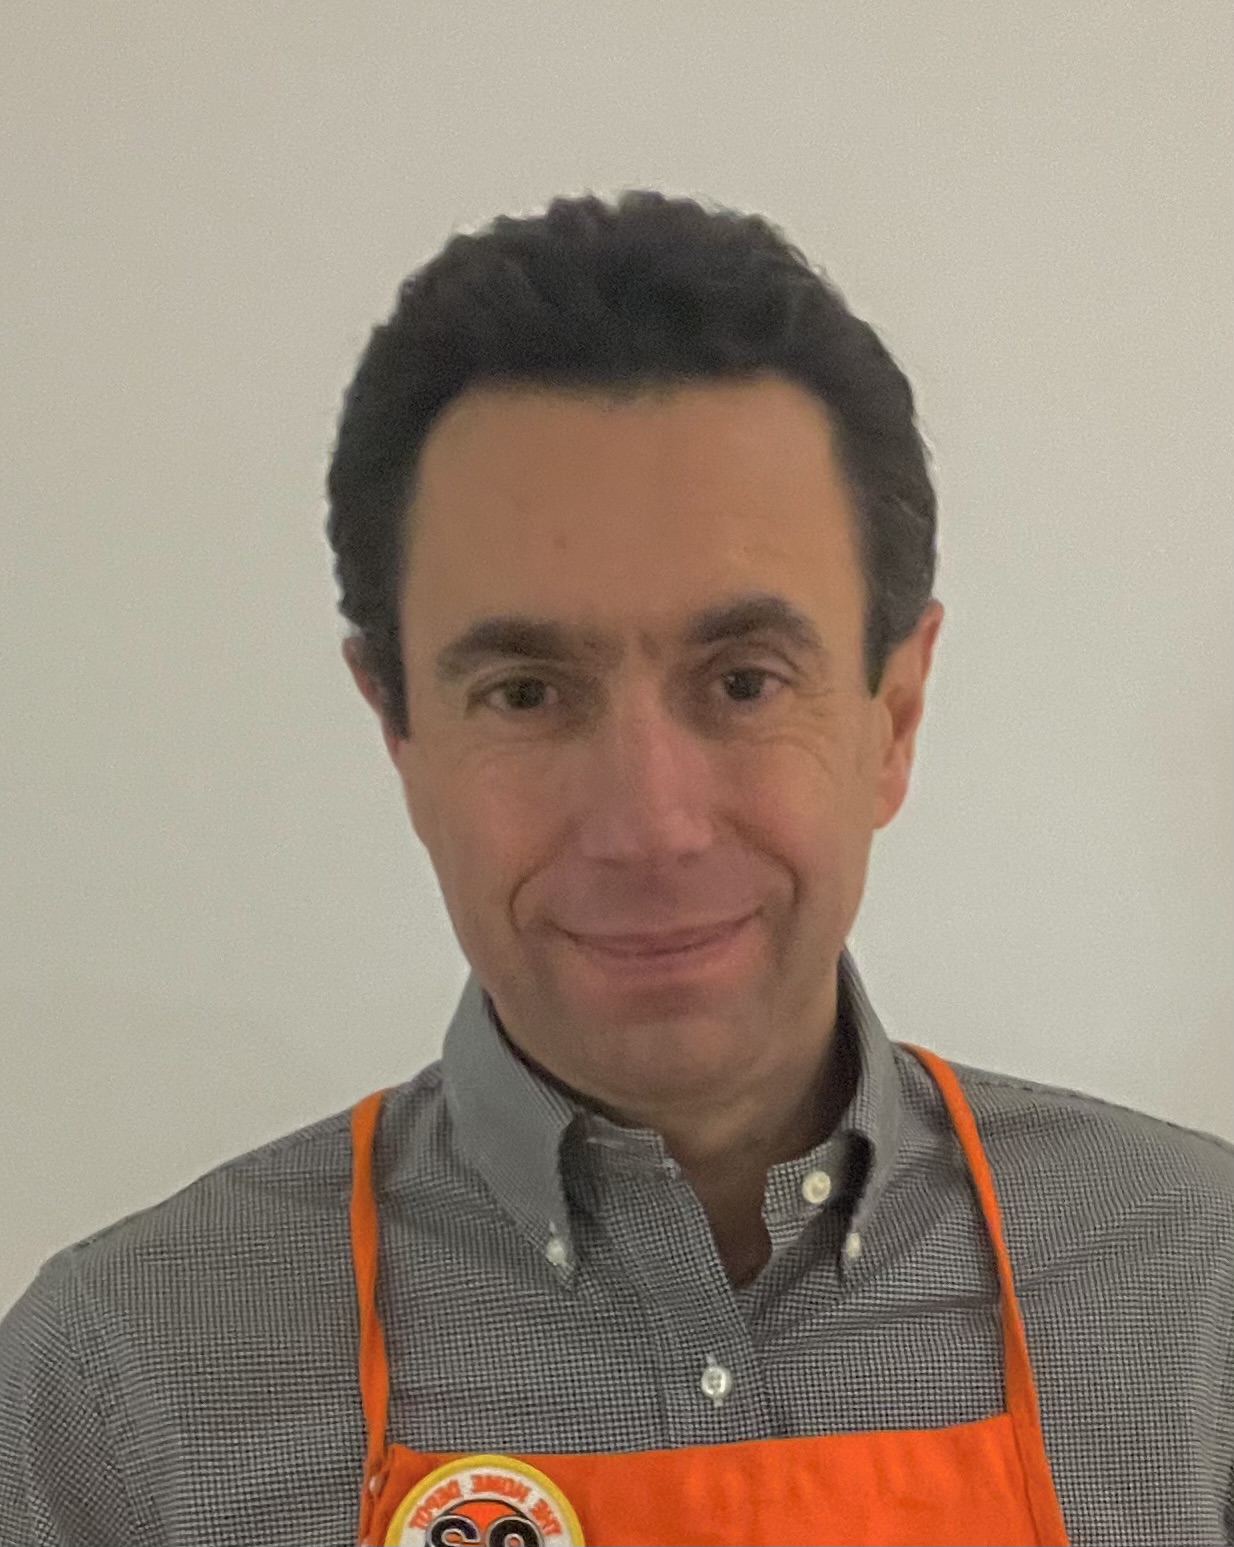 Nicolas Darget headshot in an orange apron